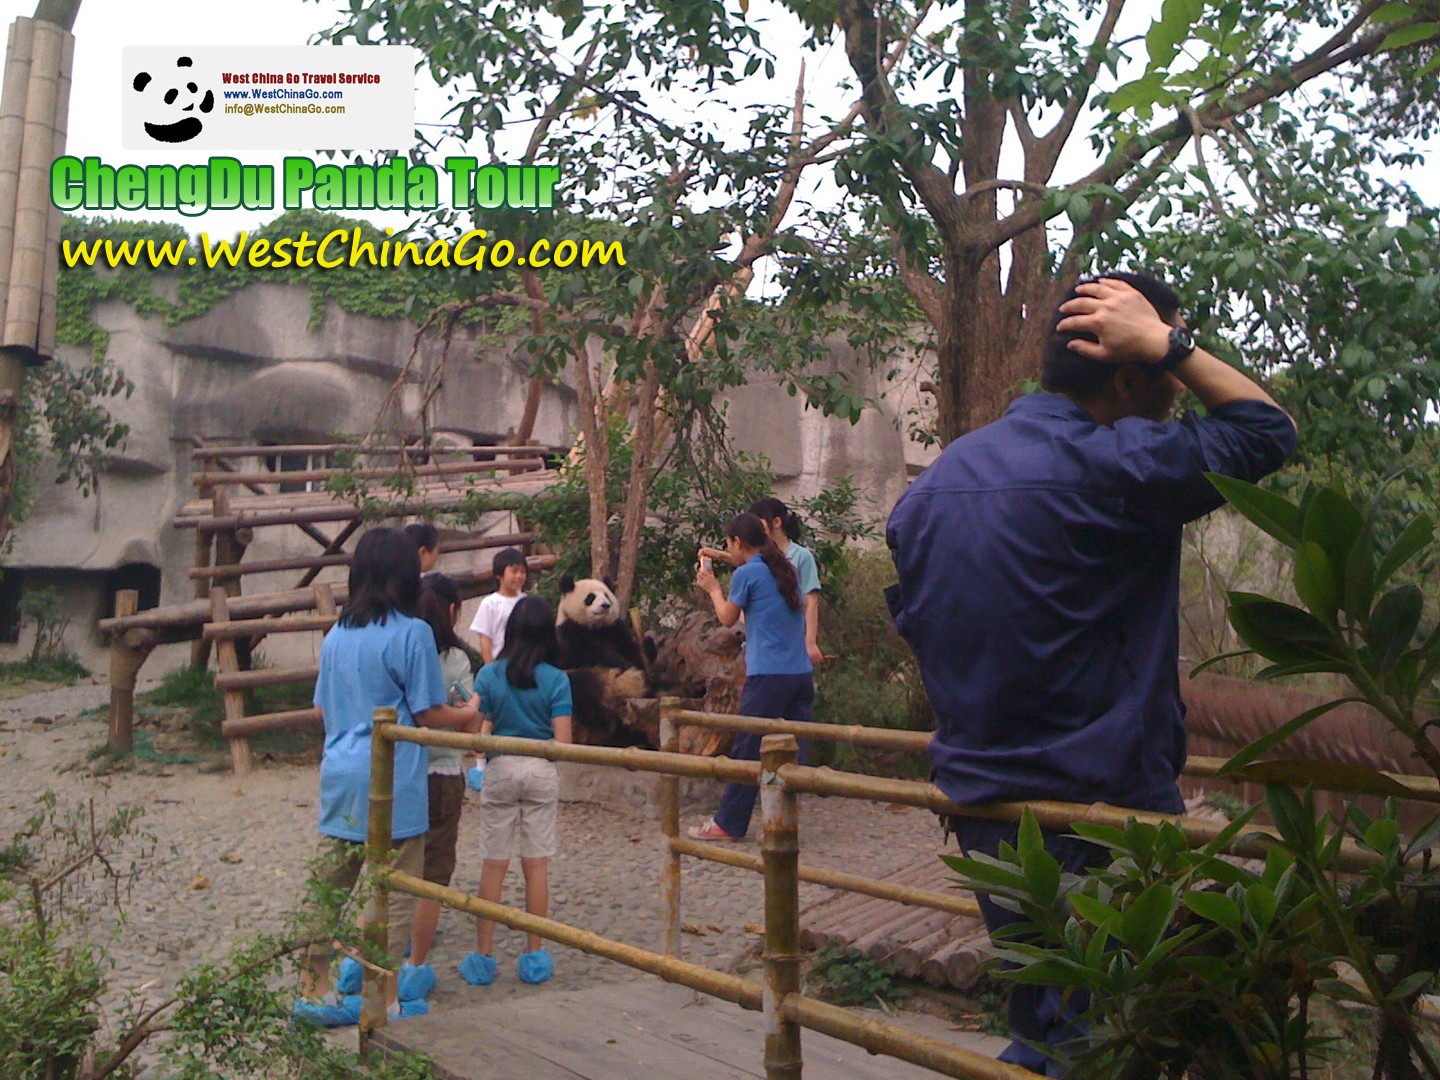 chengdu panda hug,tour,travel guide